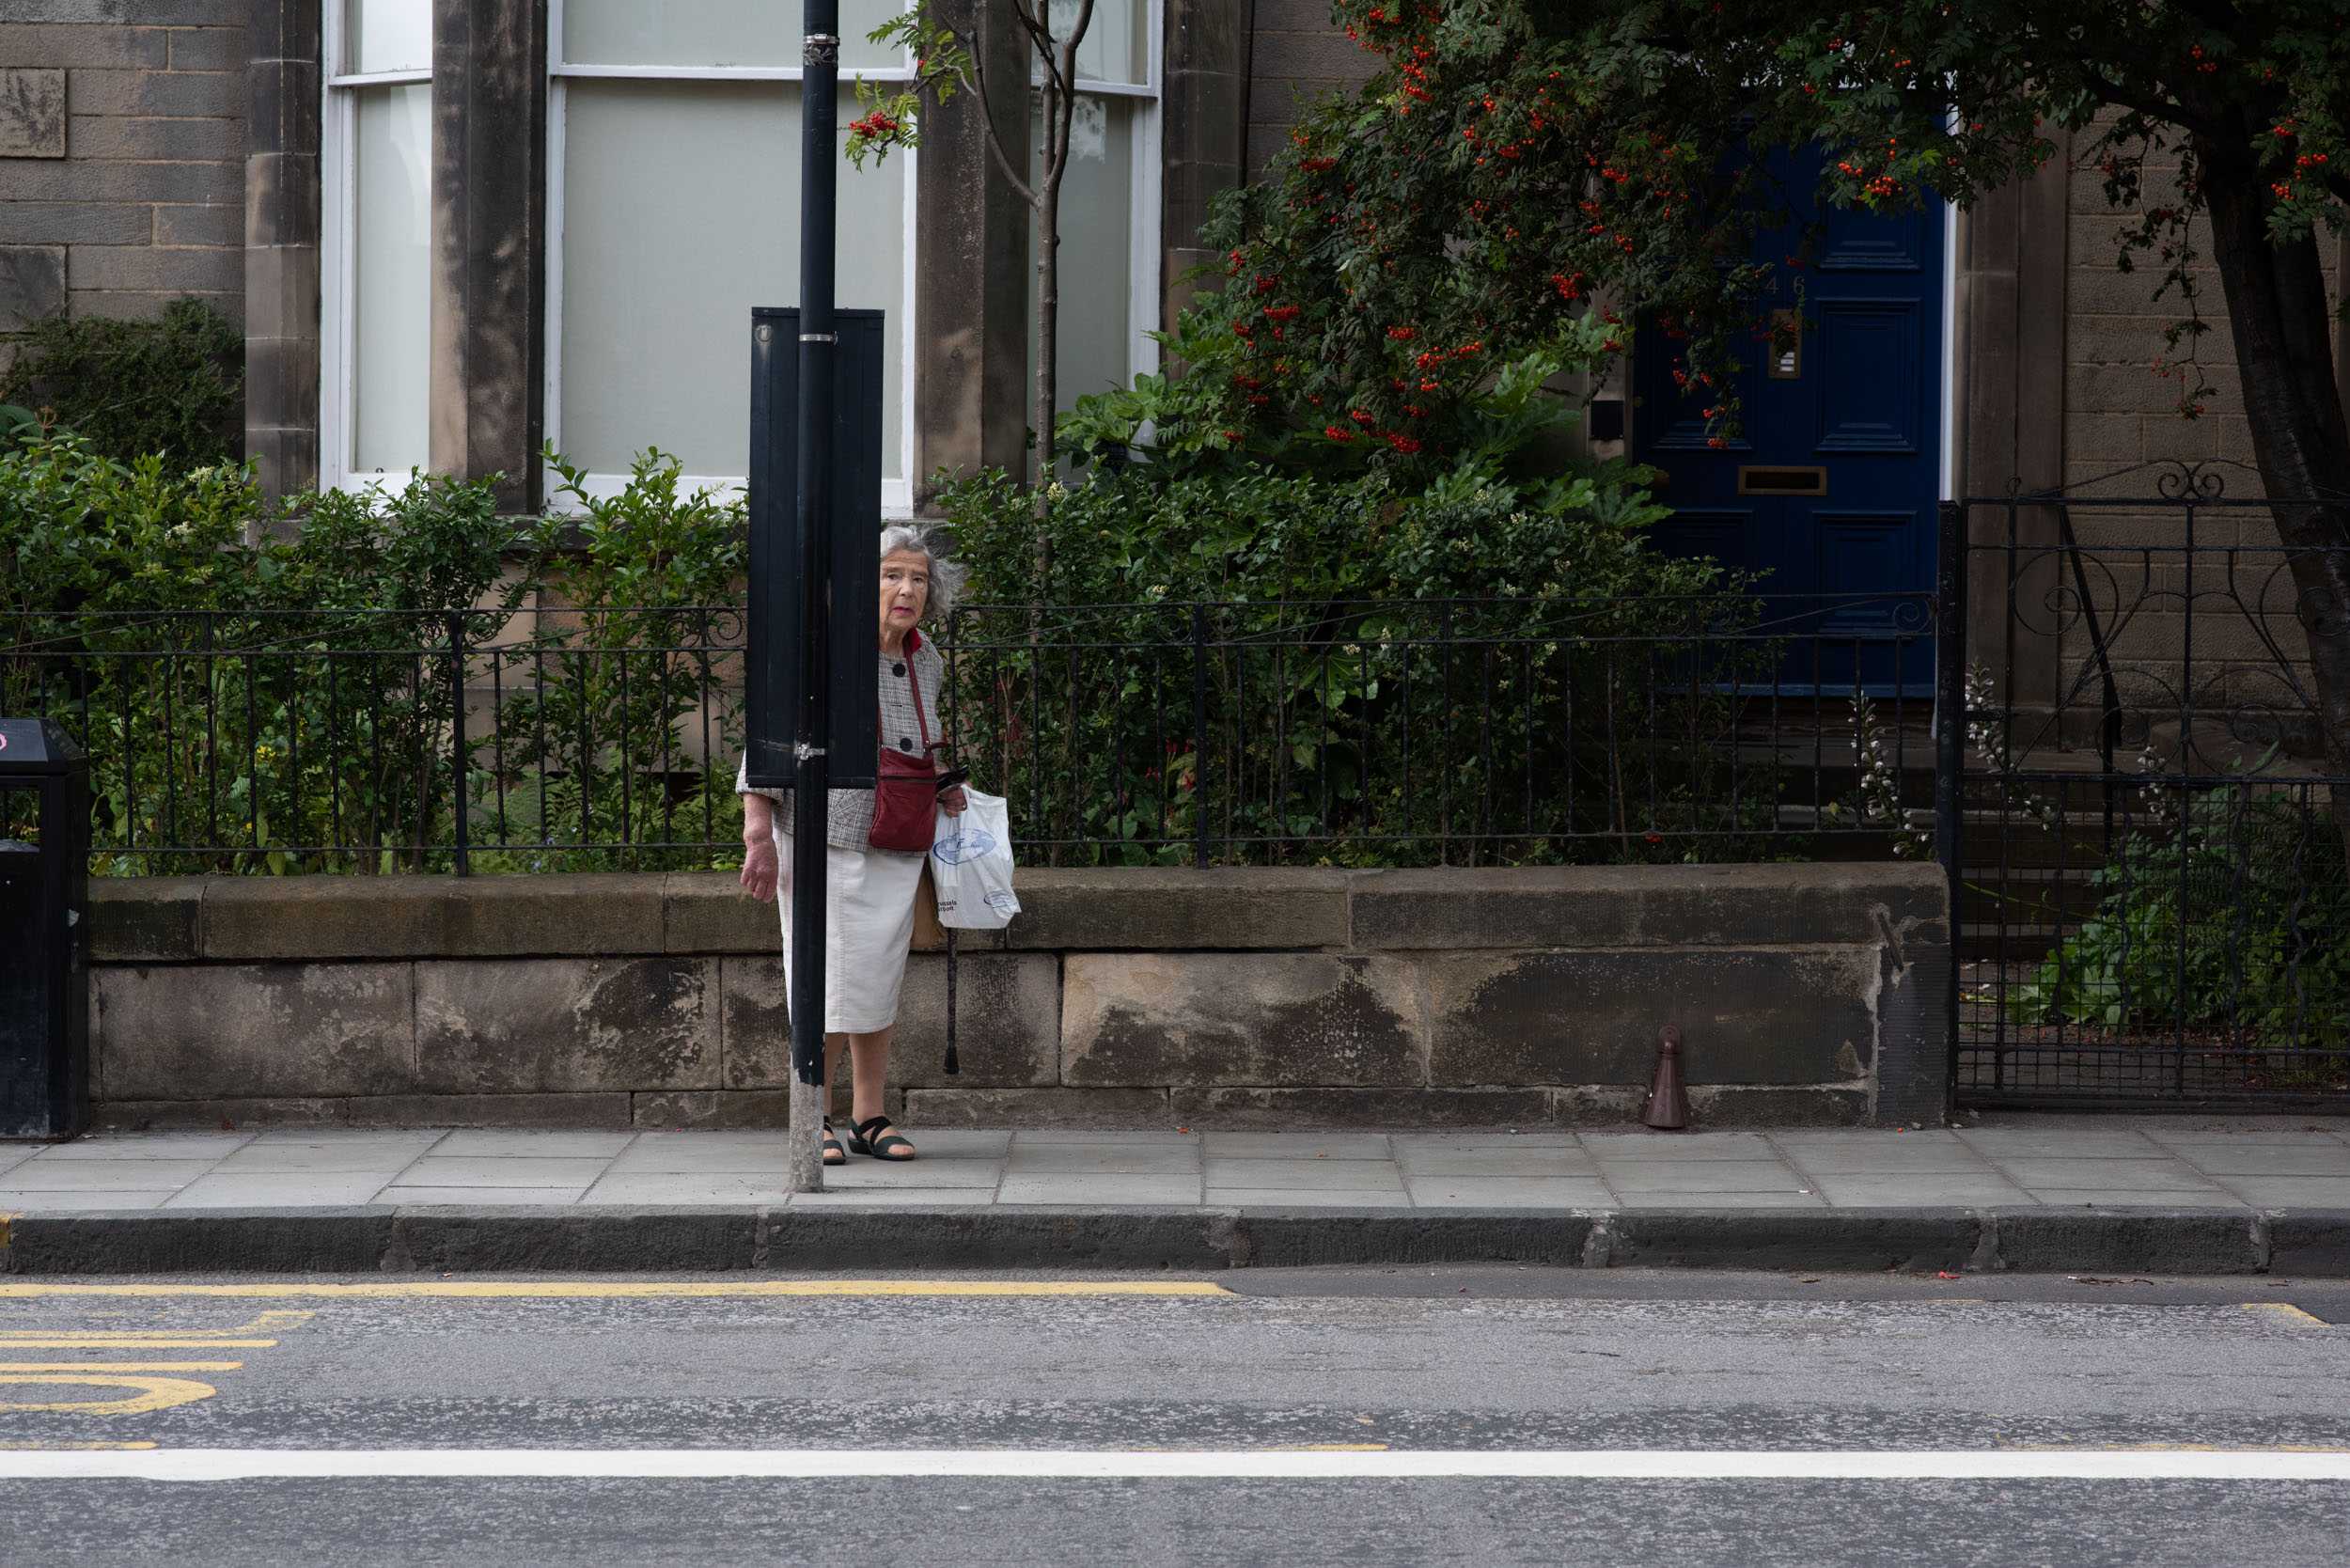 AN OLD WOMAN WAITS A BUS STOP IN EDINBURGH SCOTLAND